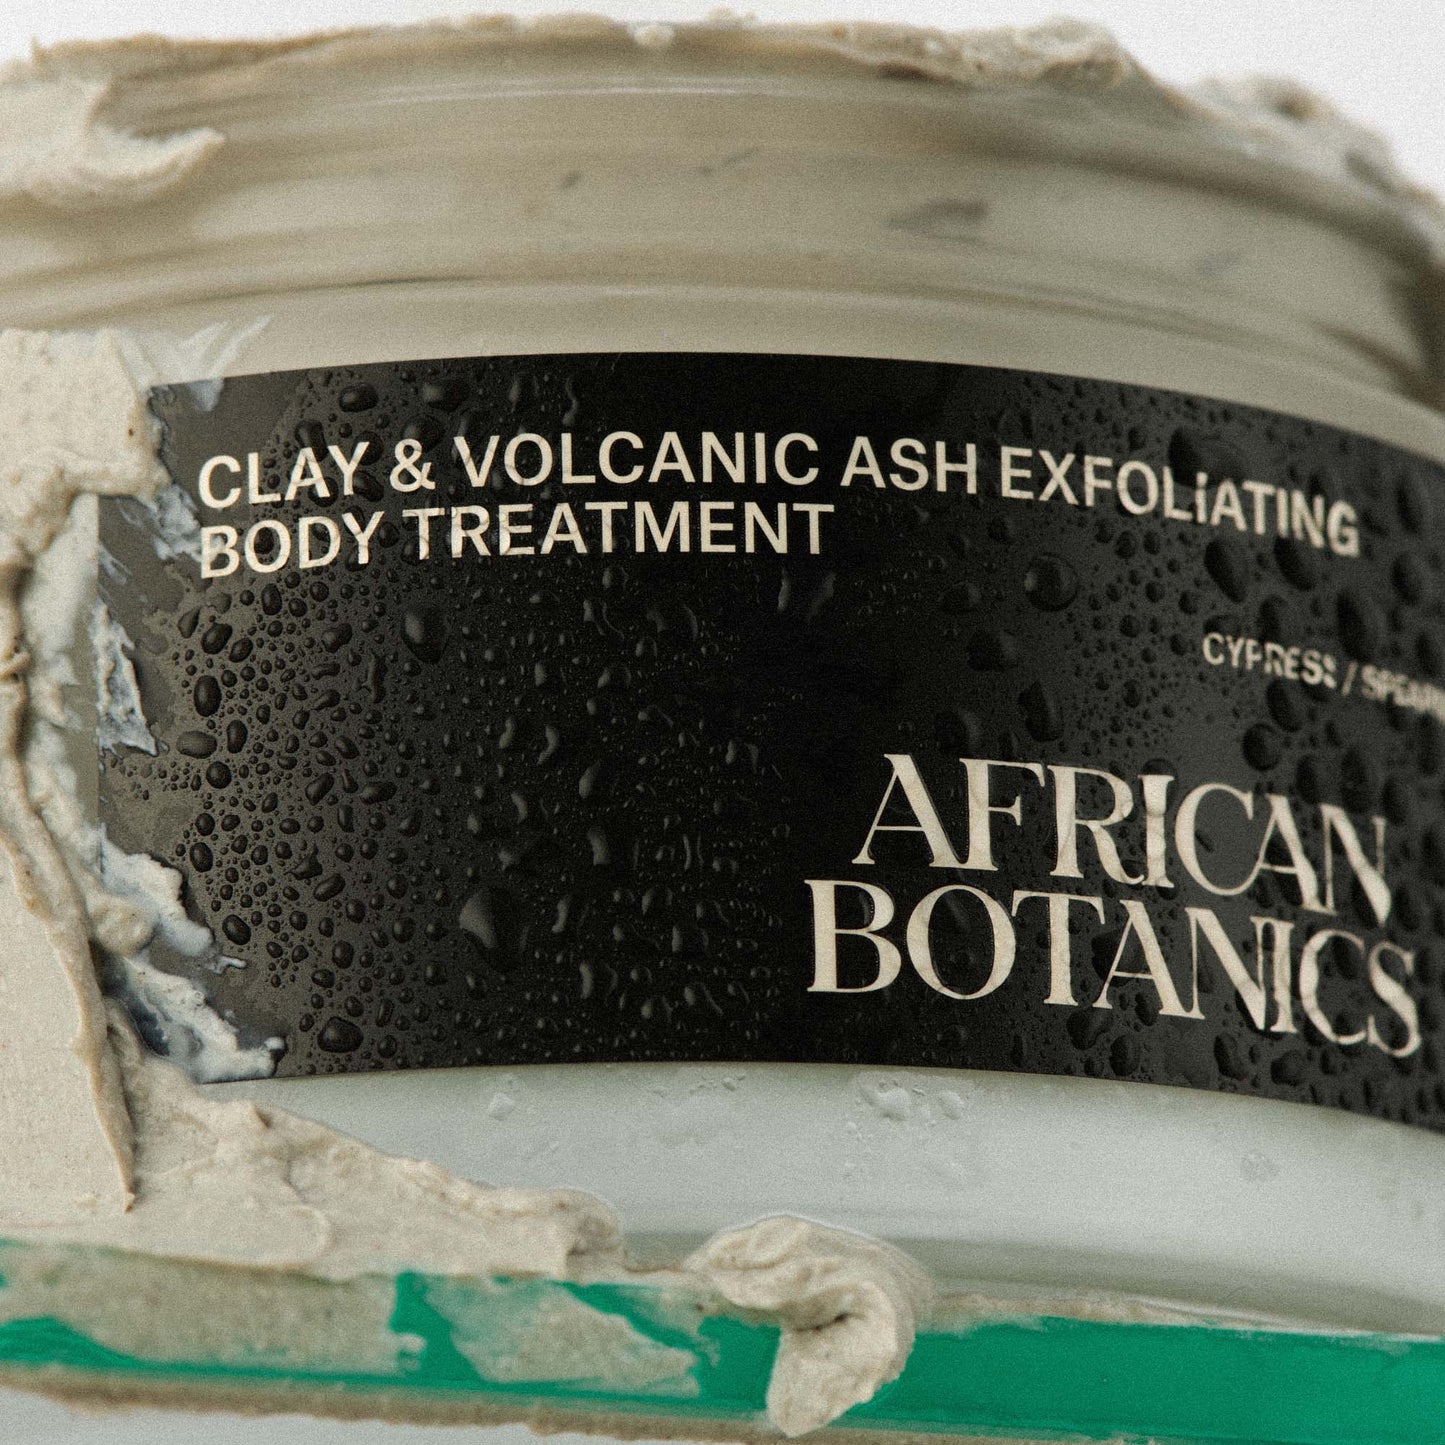 Clay & Volcanic Ash Exfoliating Body Treatment